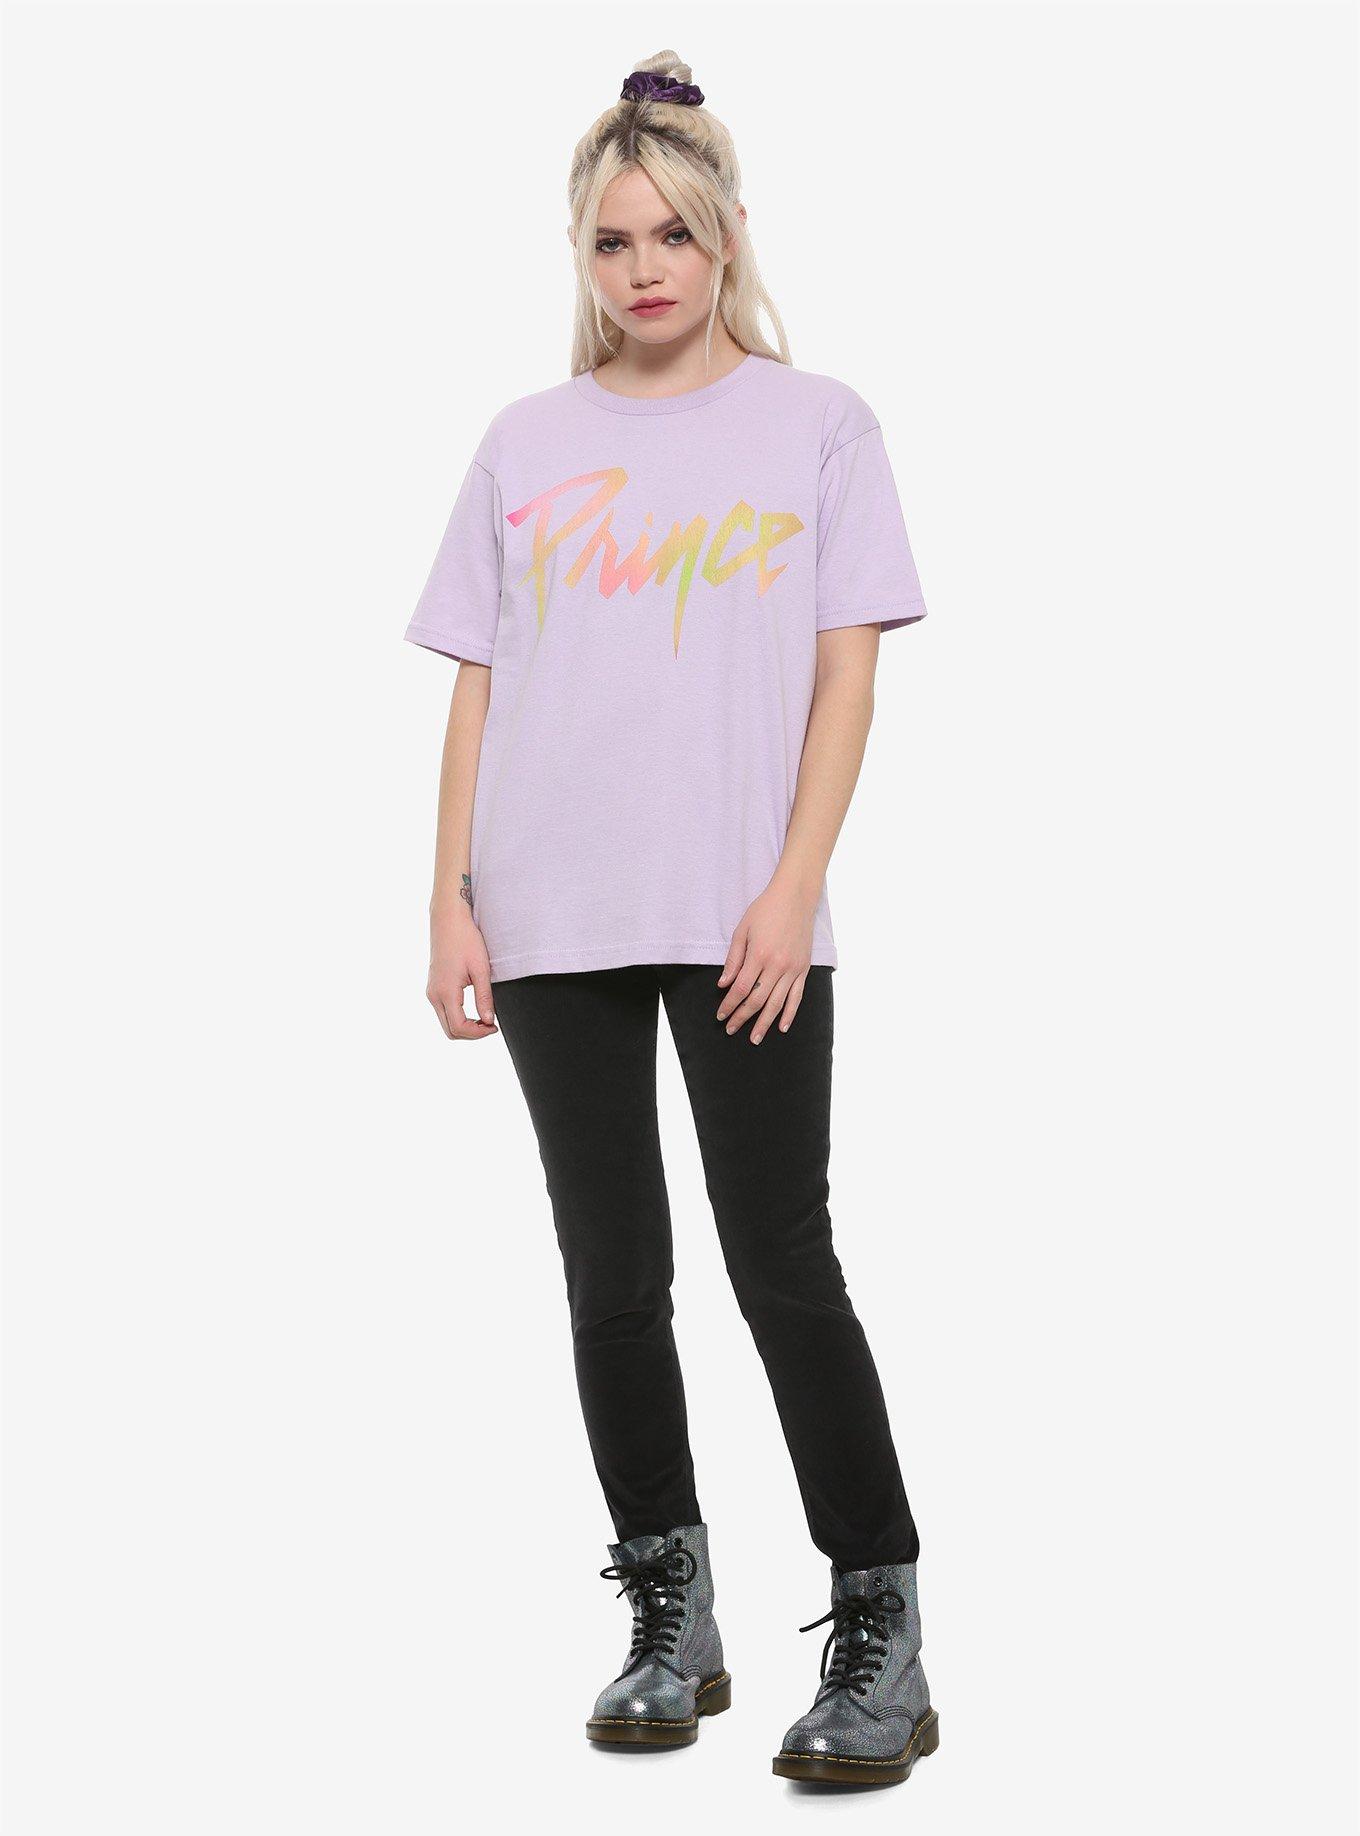 Prince Pastel Logo Girls T-Shirt, PURPLE, alternate